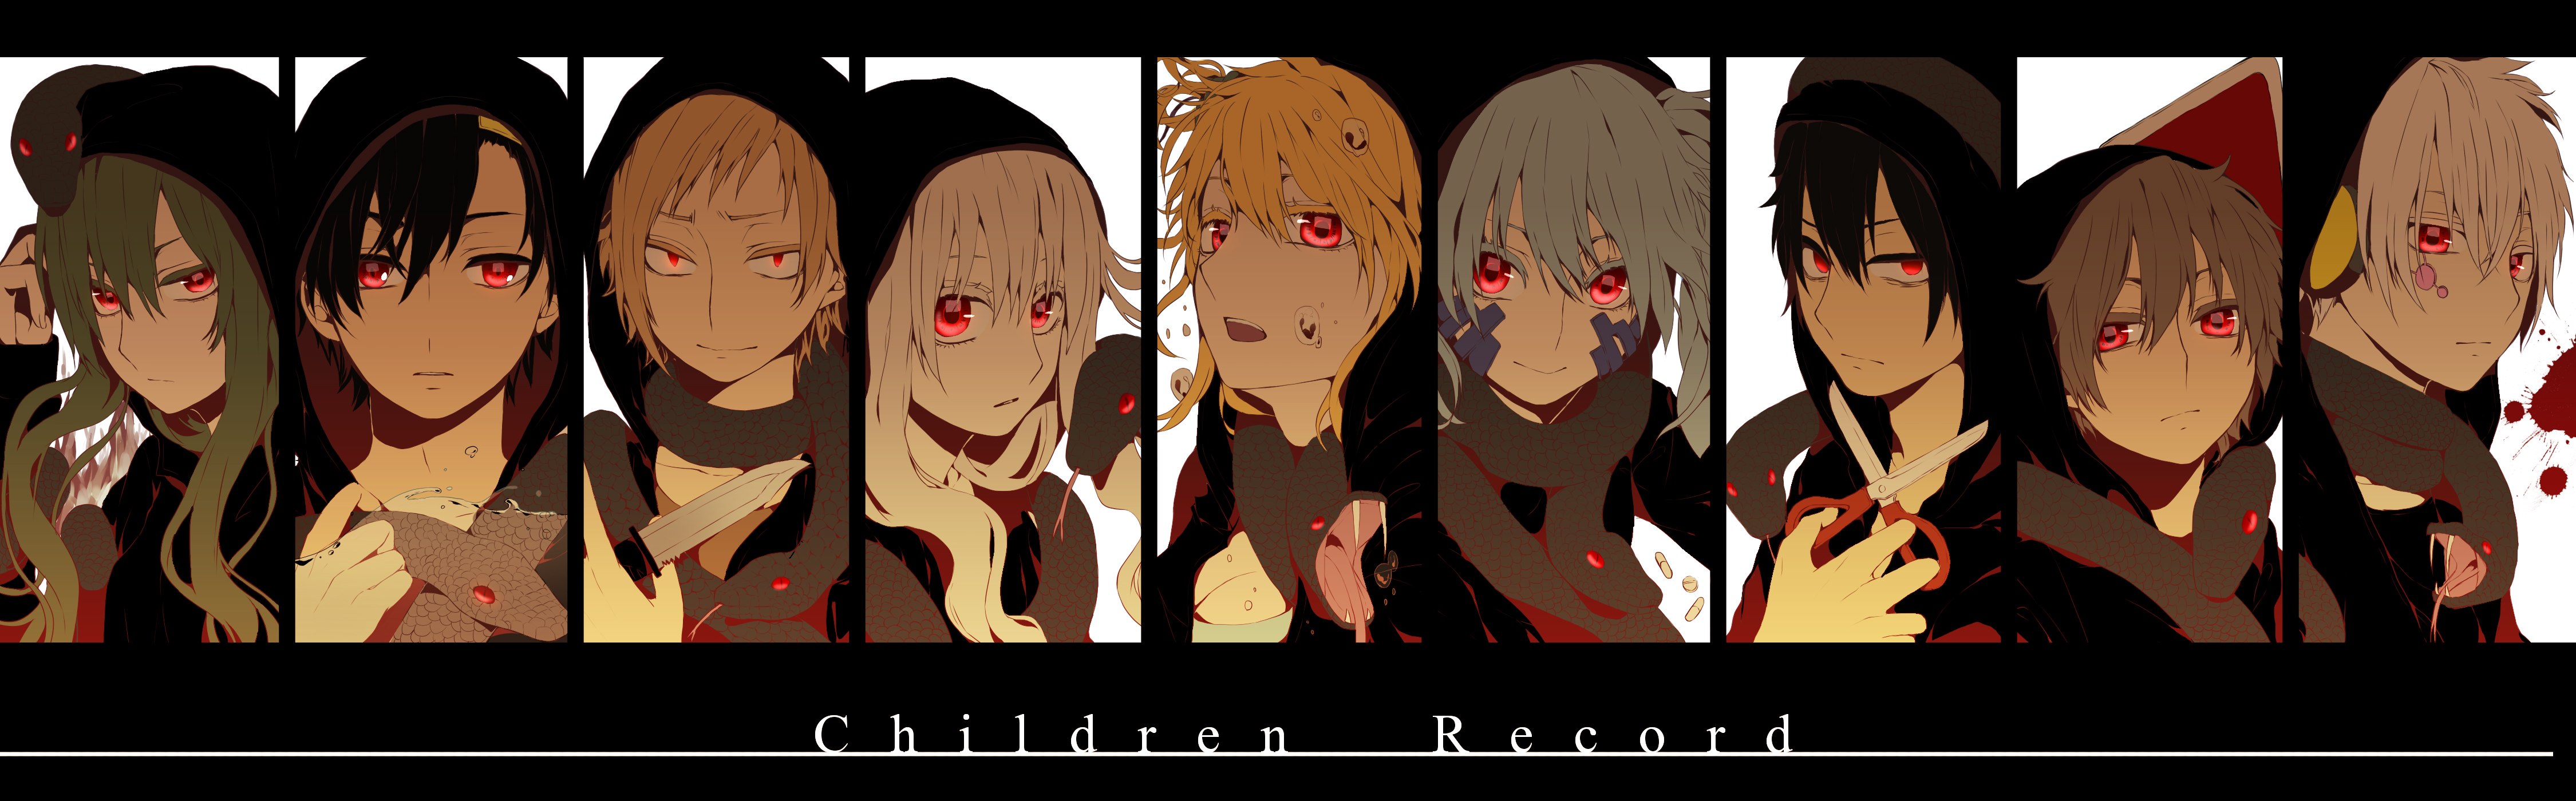 kagerou, Project, Children, Record, Multi, Dual Wallpaper